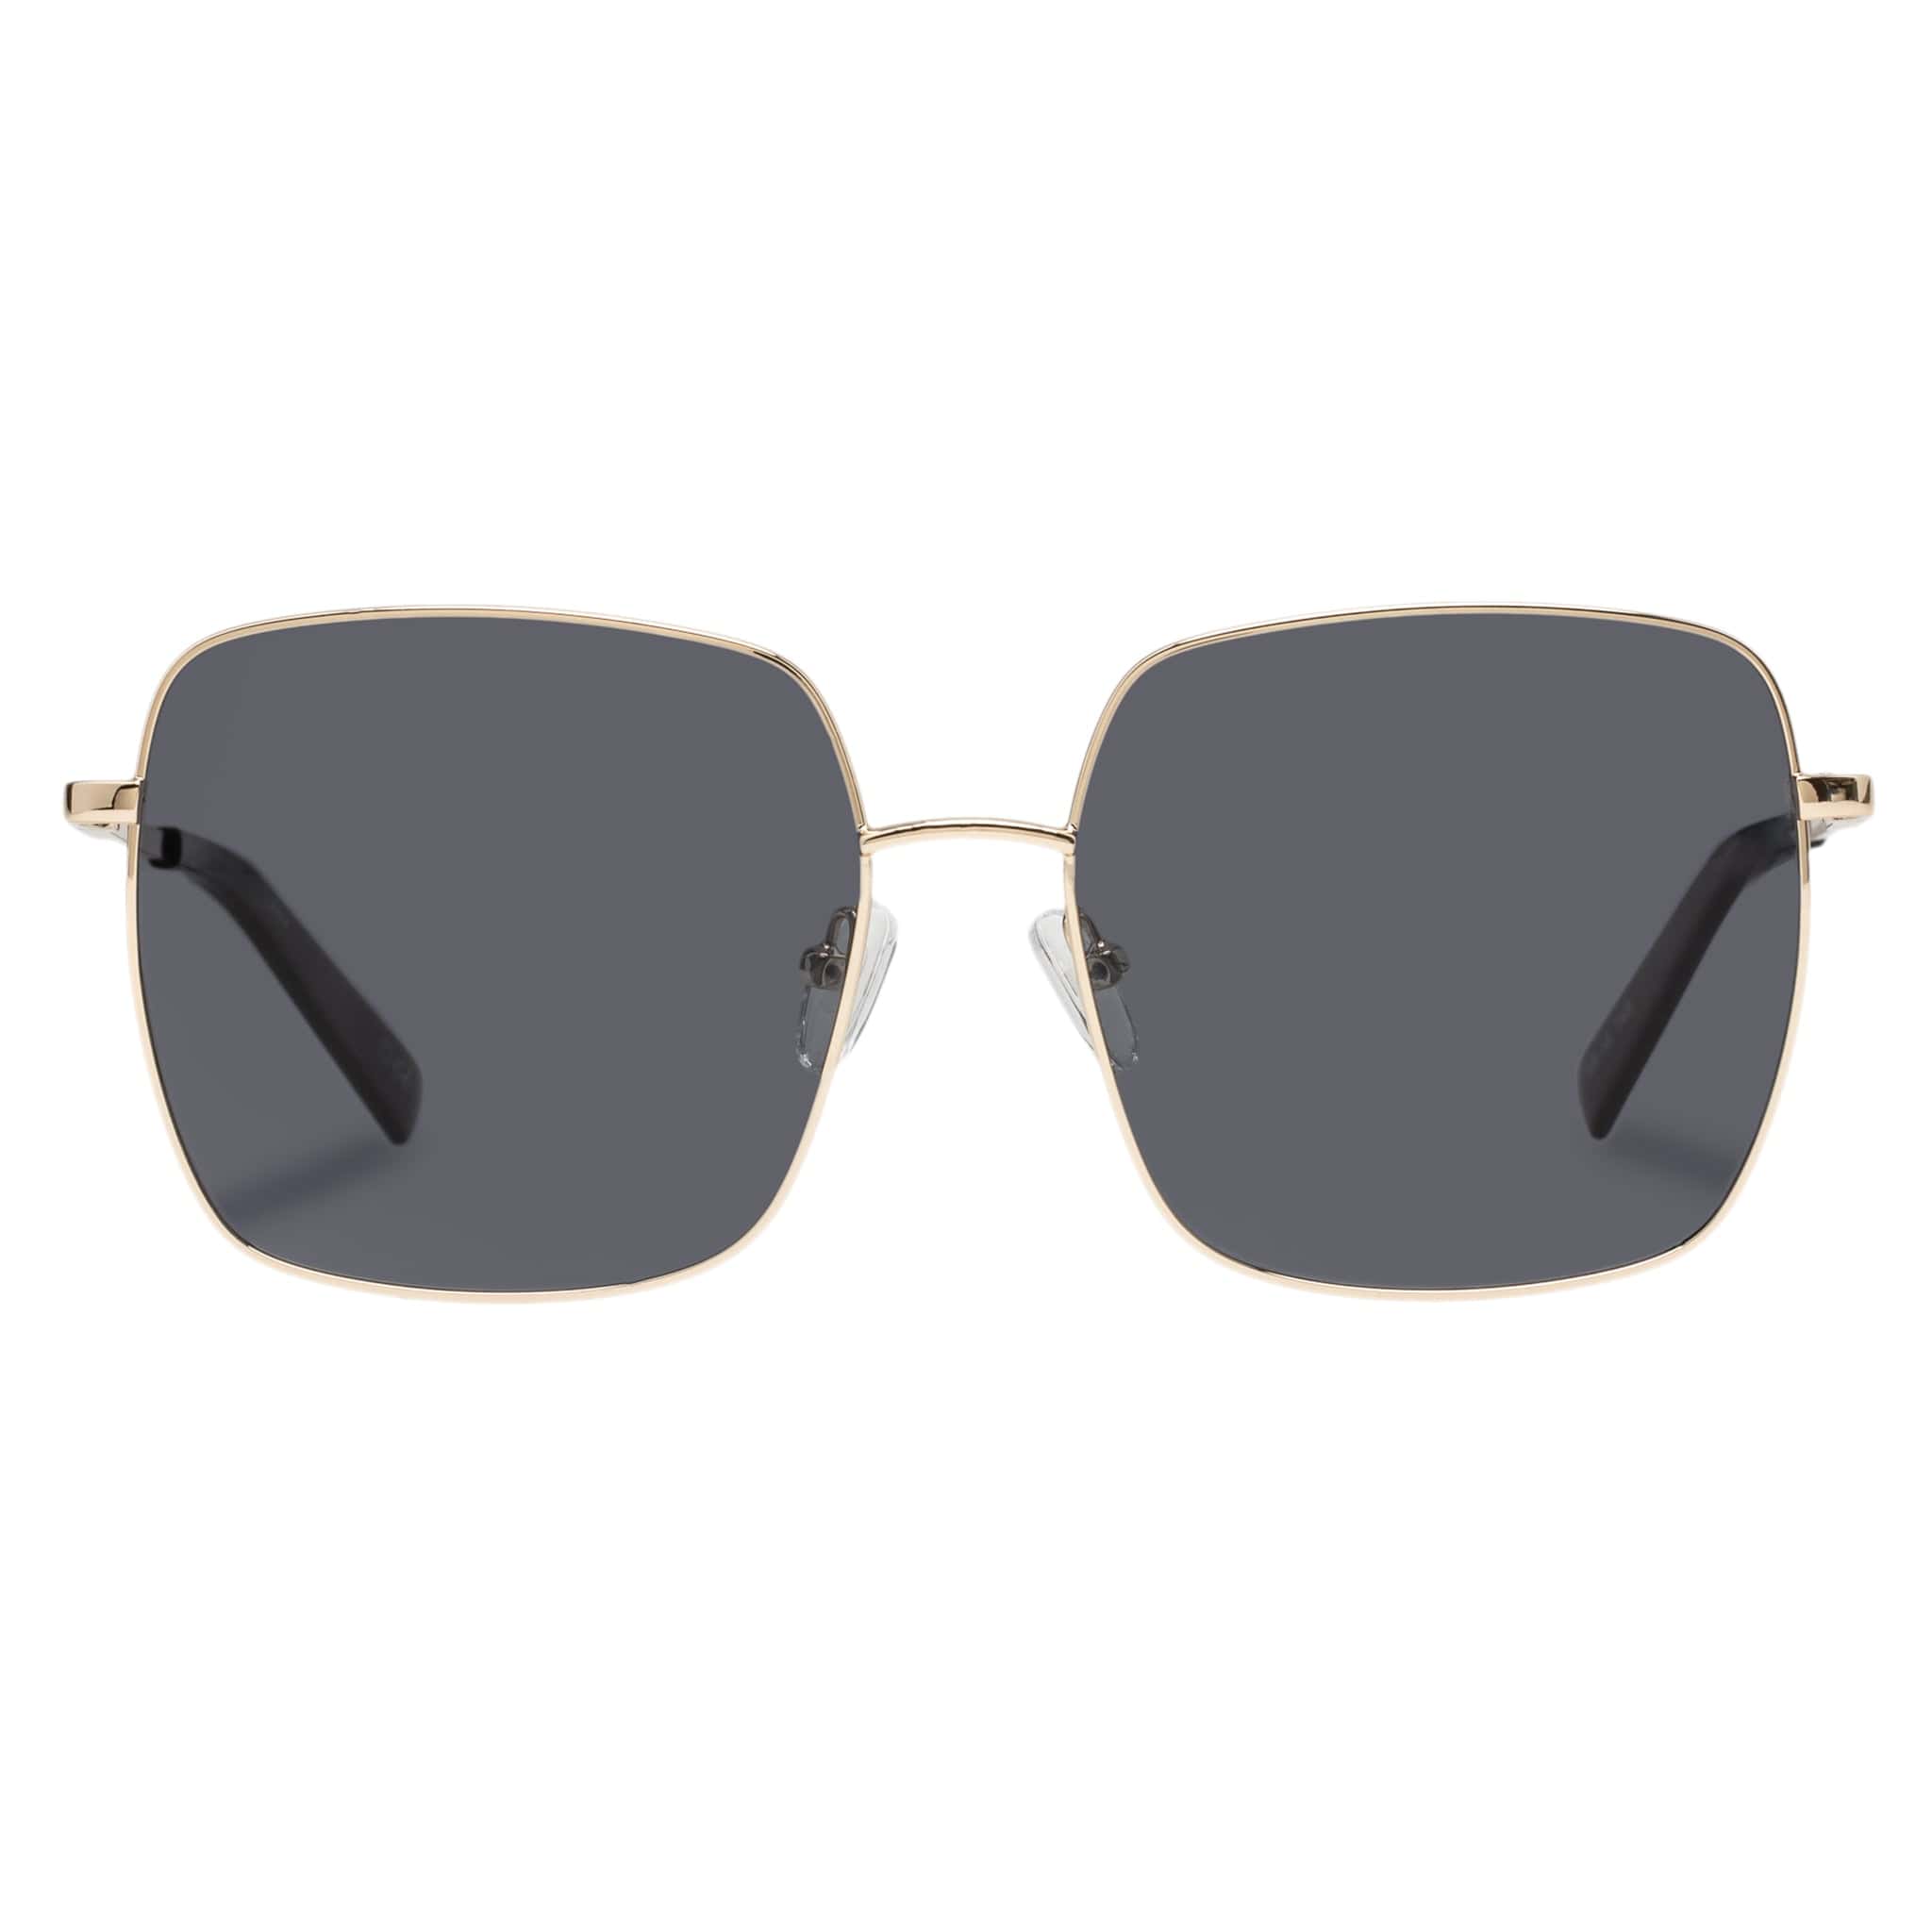 The Cherished Sunglasses (Black/Gold)